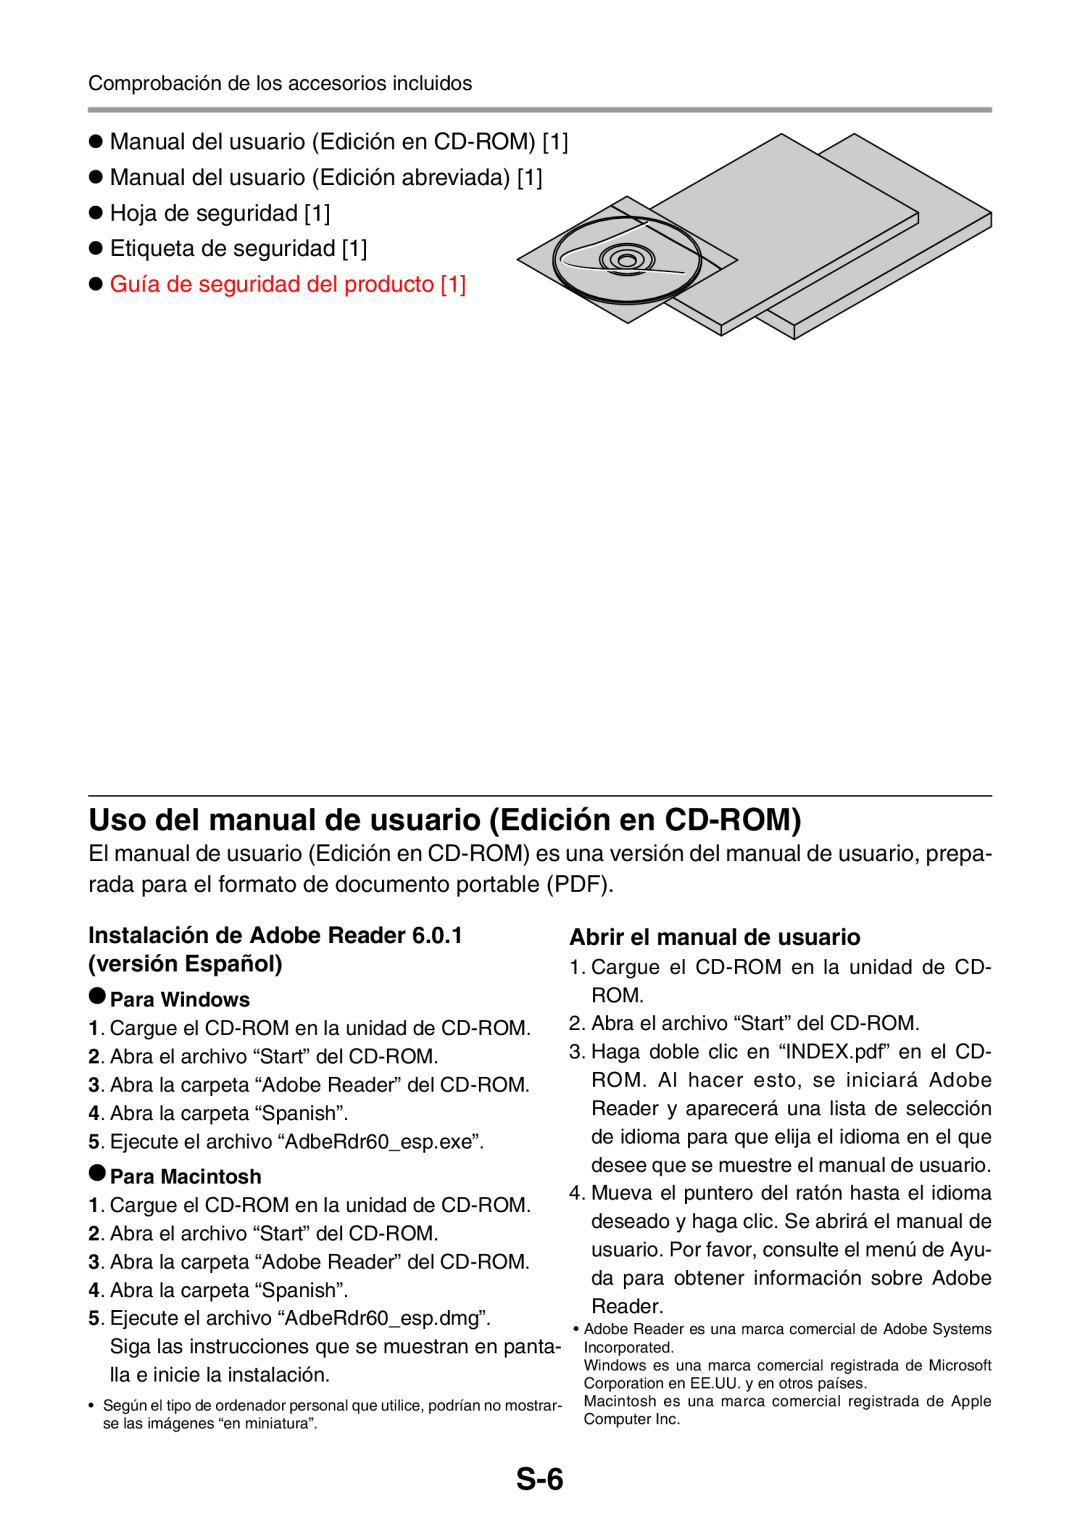 3M PX5 user manual Uso del manual de usuario Edición en CD-ROM, Manual del usuario Edición en CD-ROM, Etiqueta de seguridad 